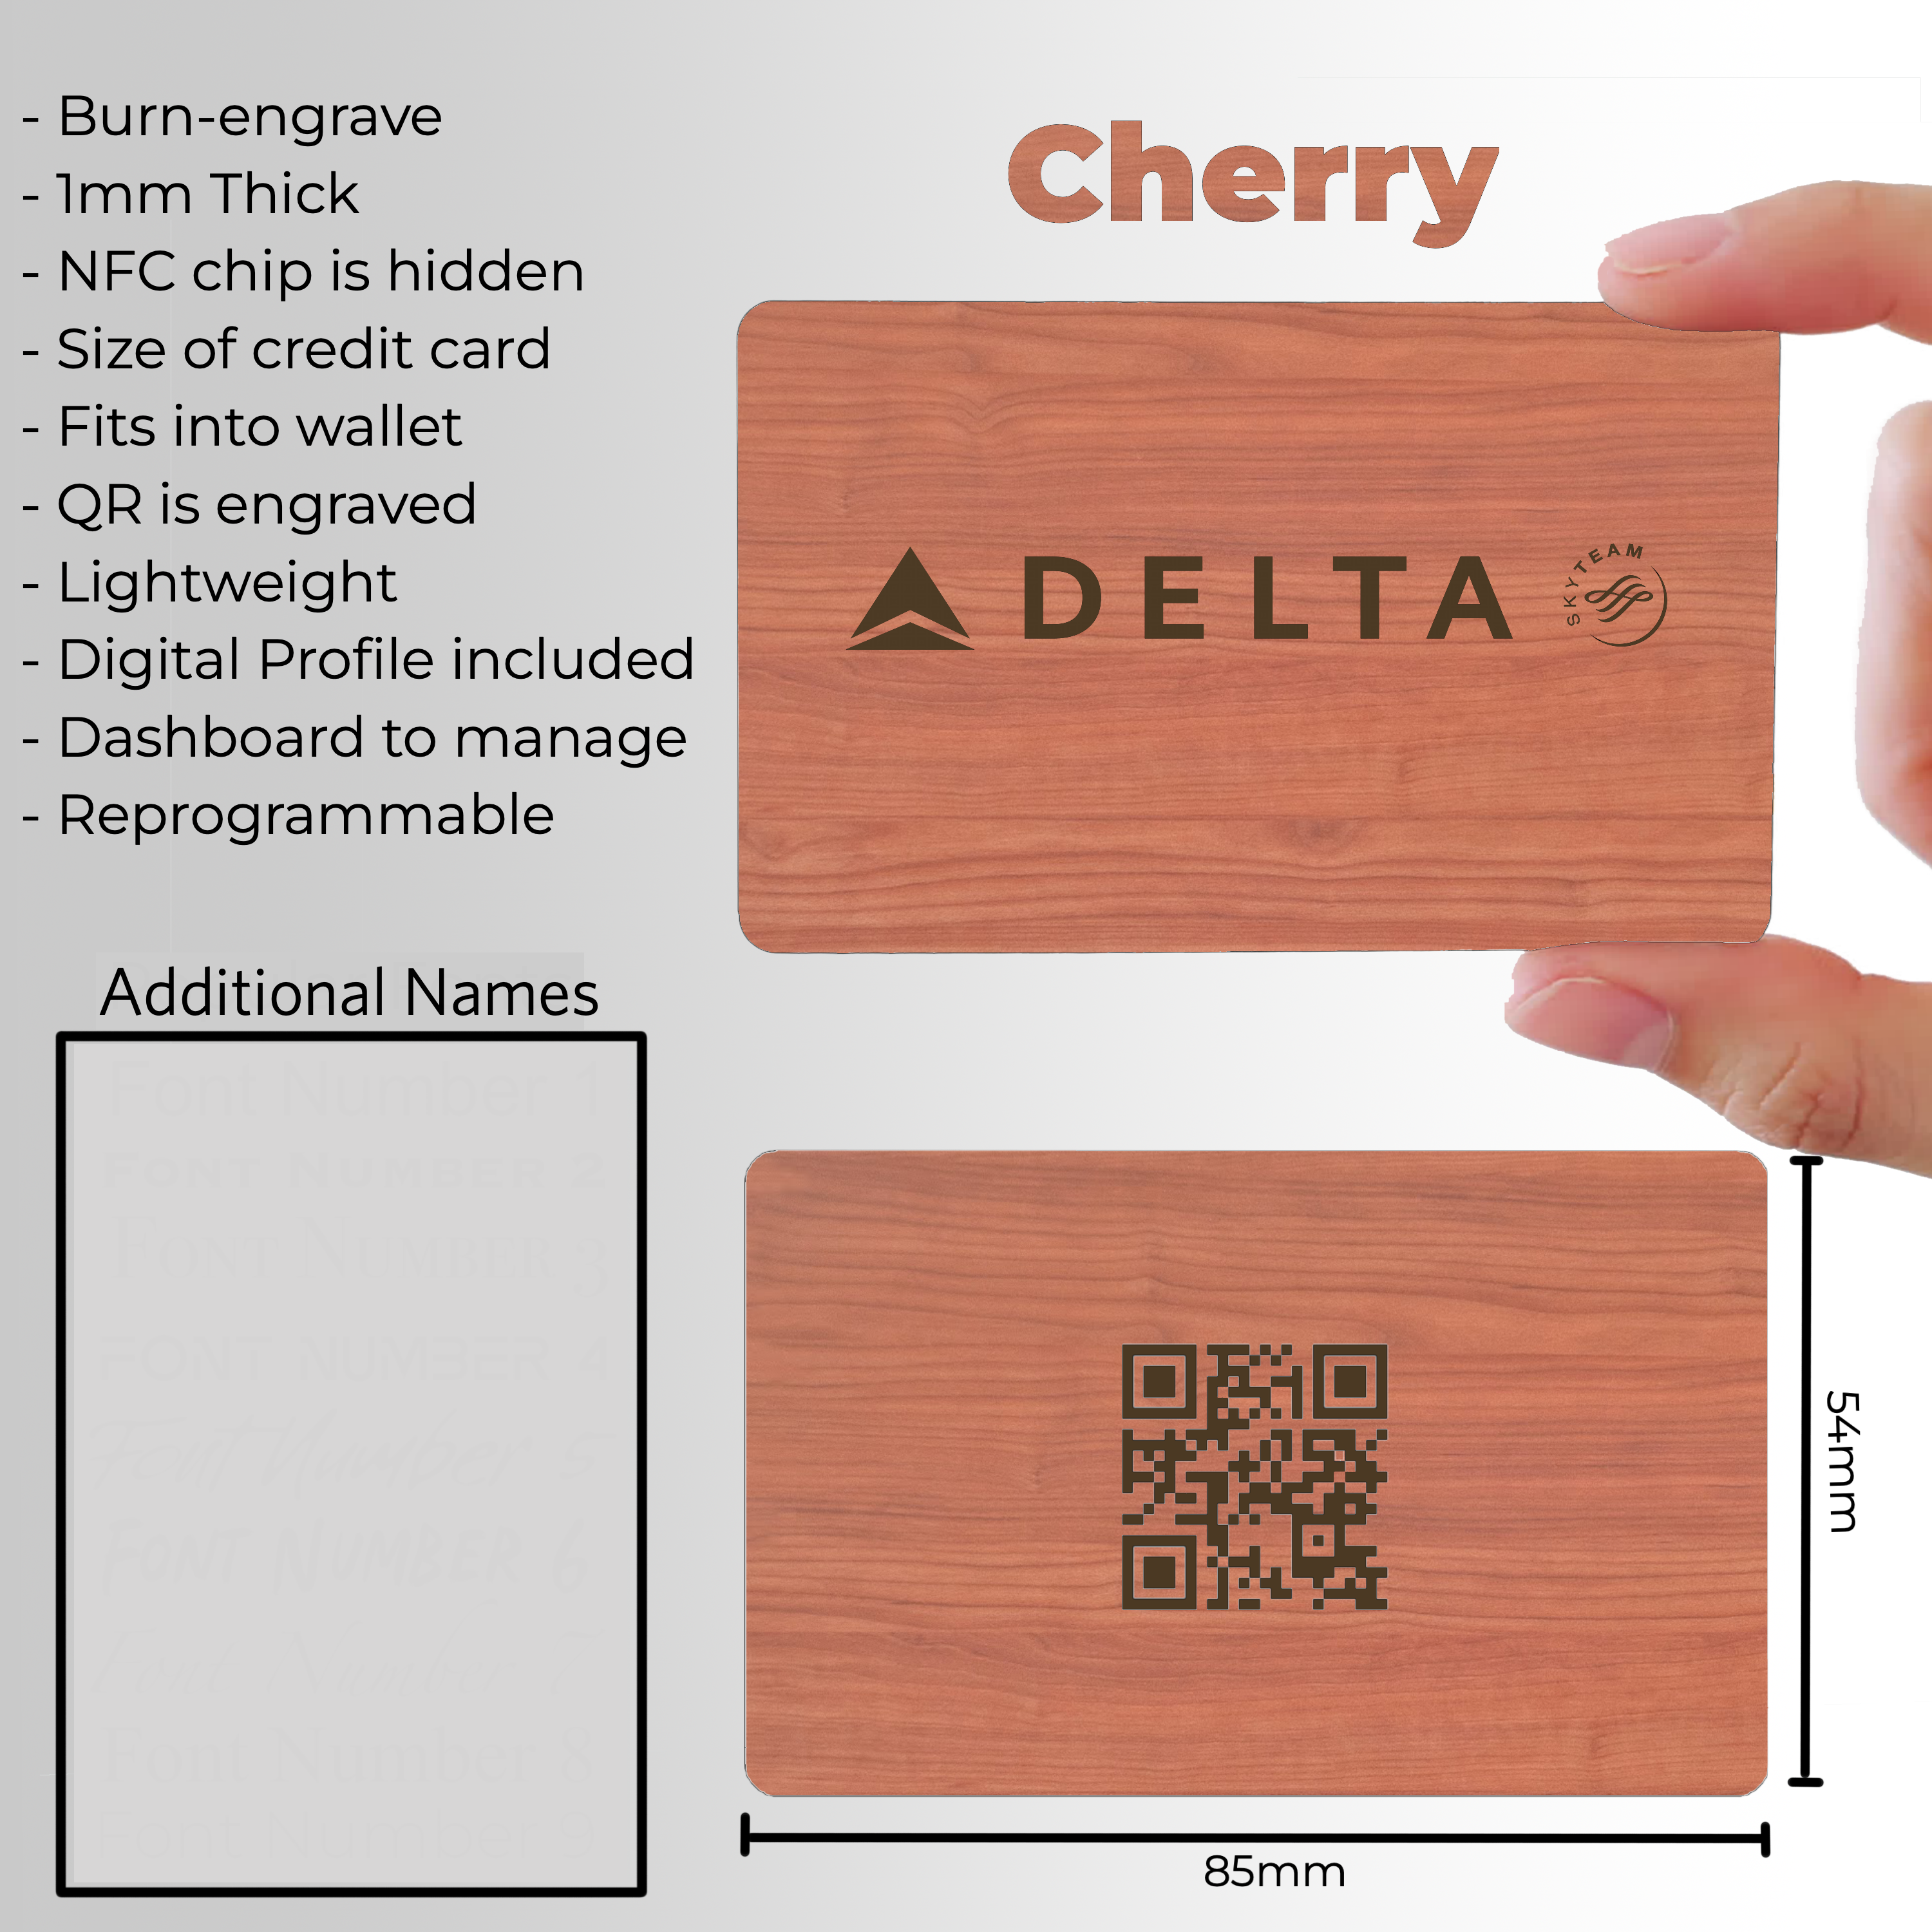 Delta NFC Business Card - Cherry